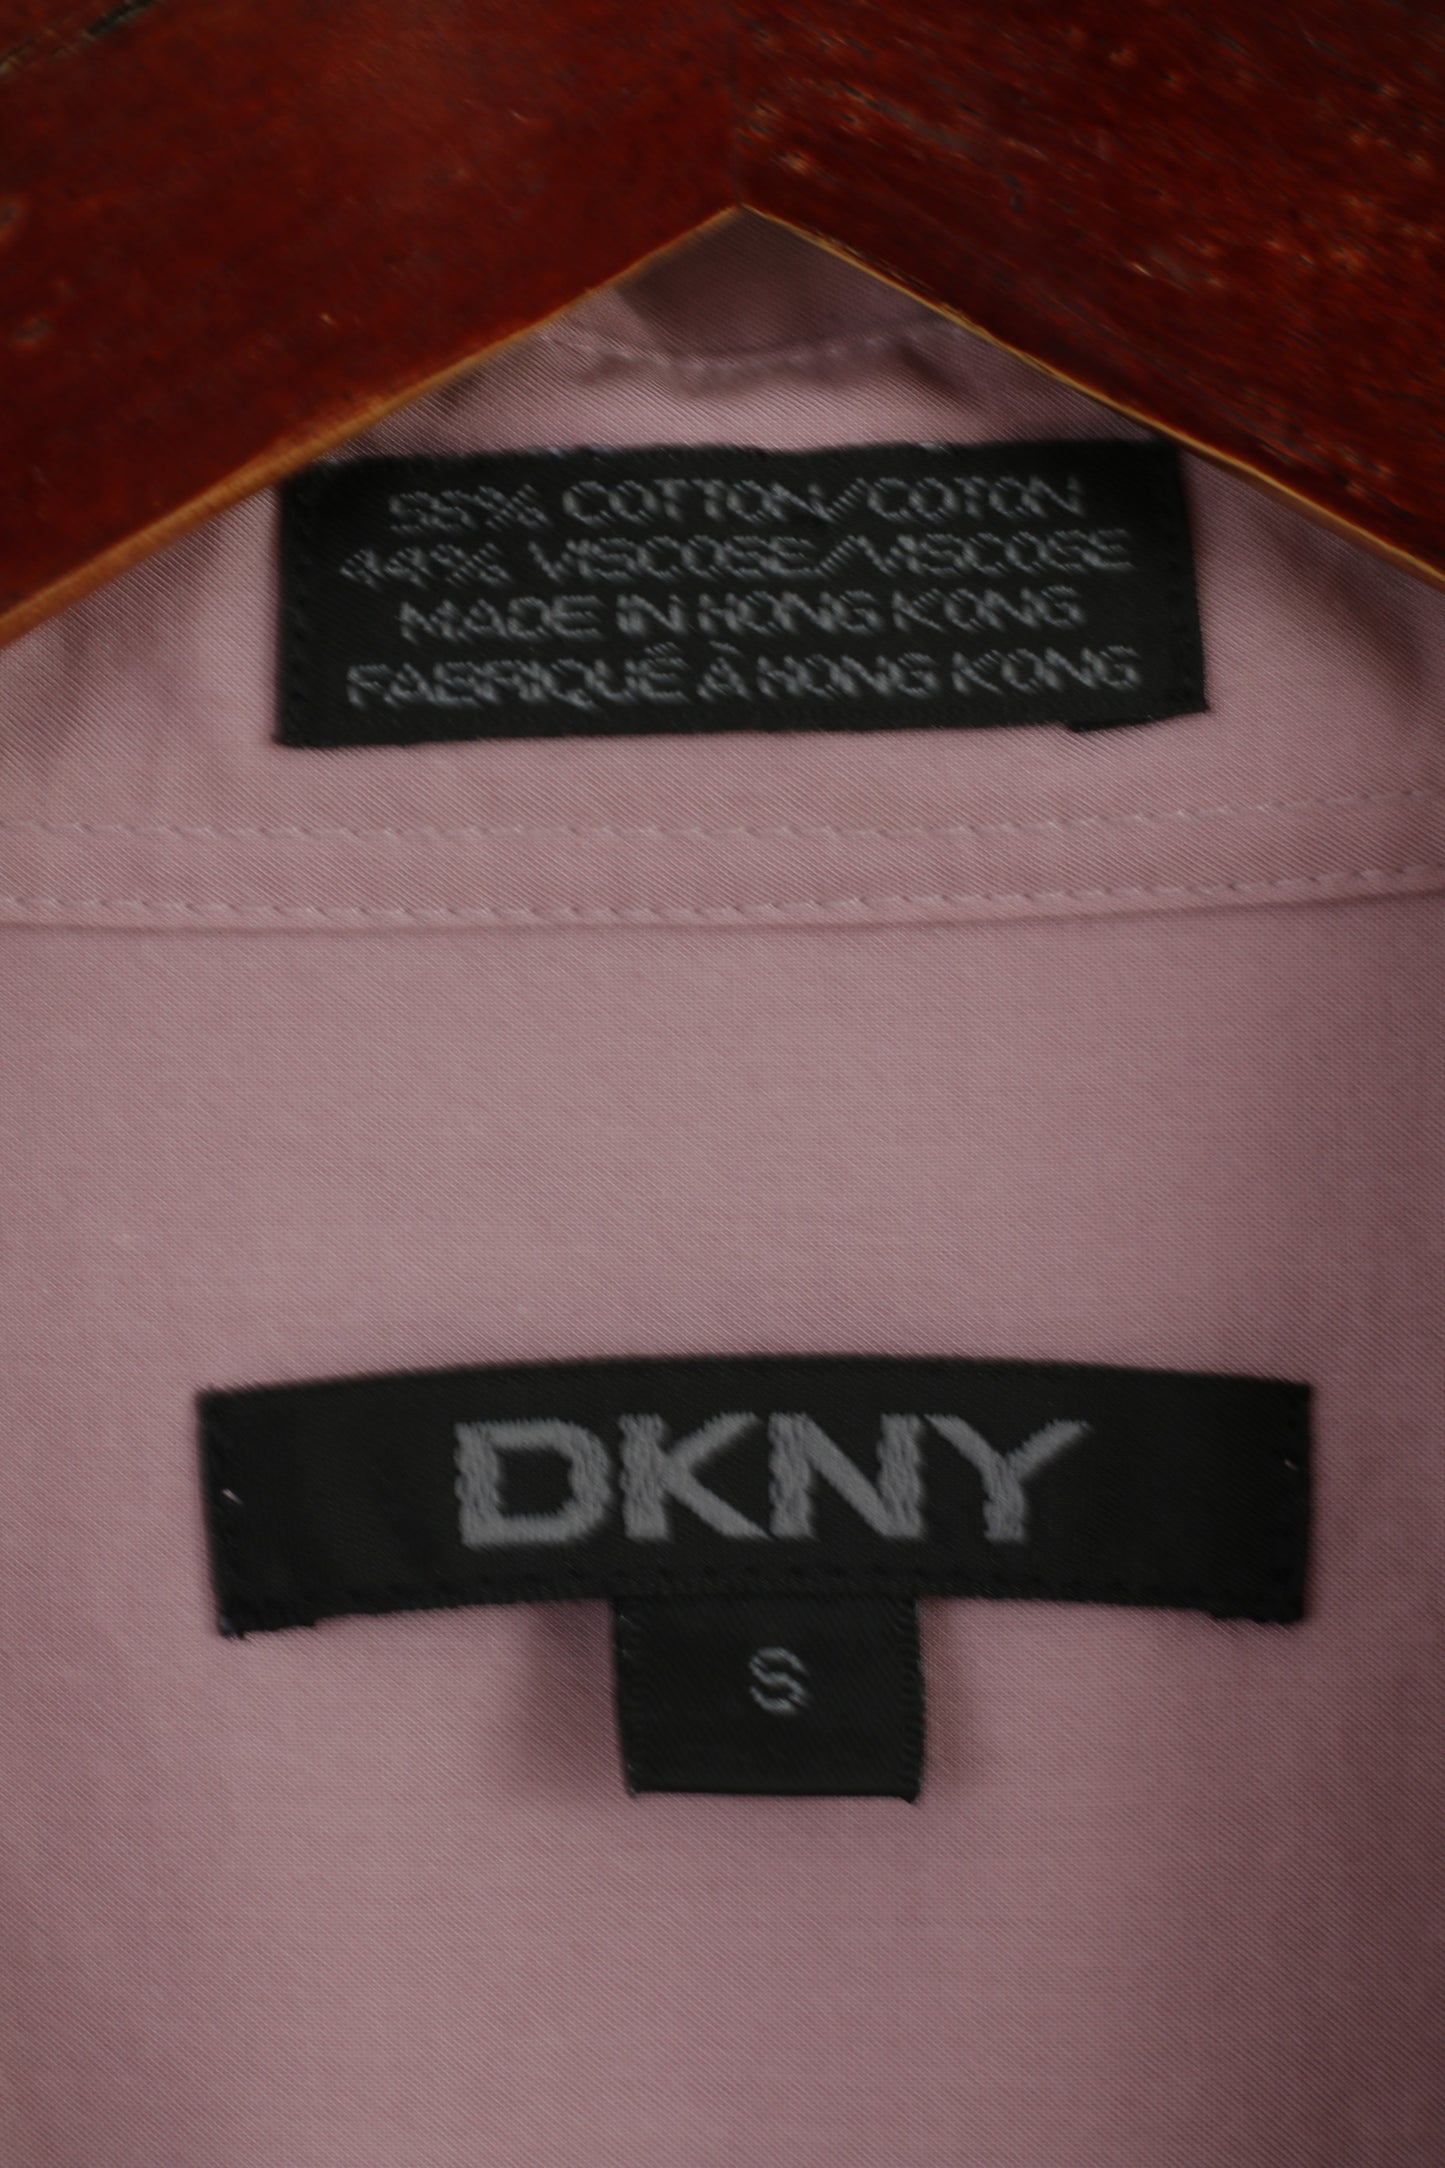 DKNY Men S Casual Shirt Lila Cotton Viscose Blend Soft Long Sleeve Top